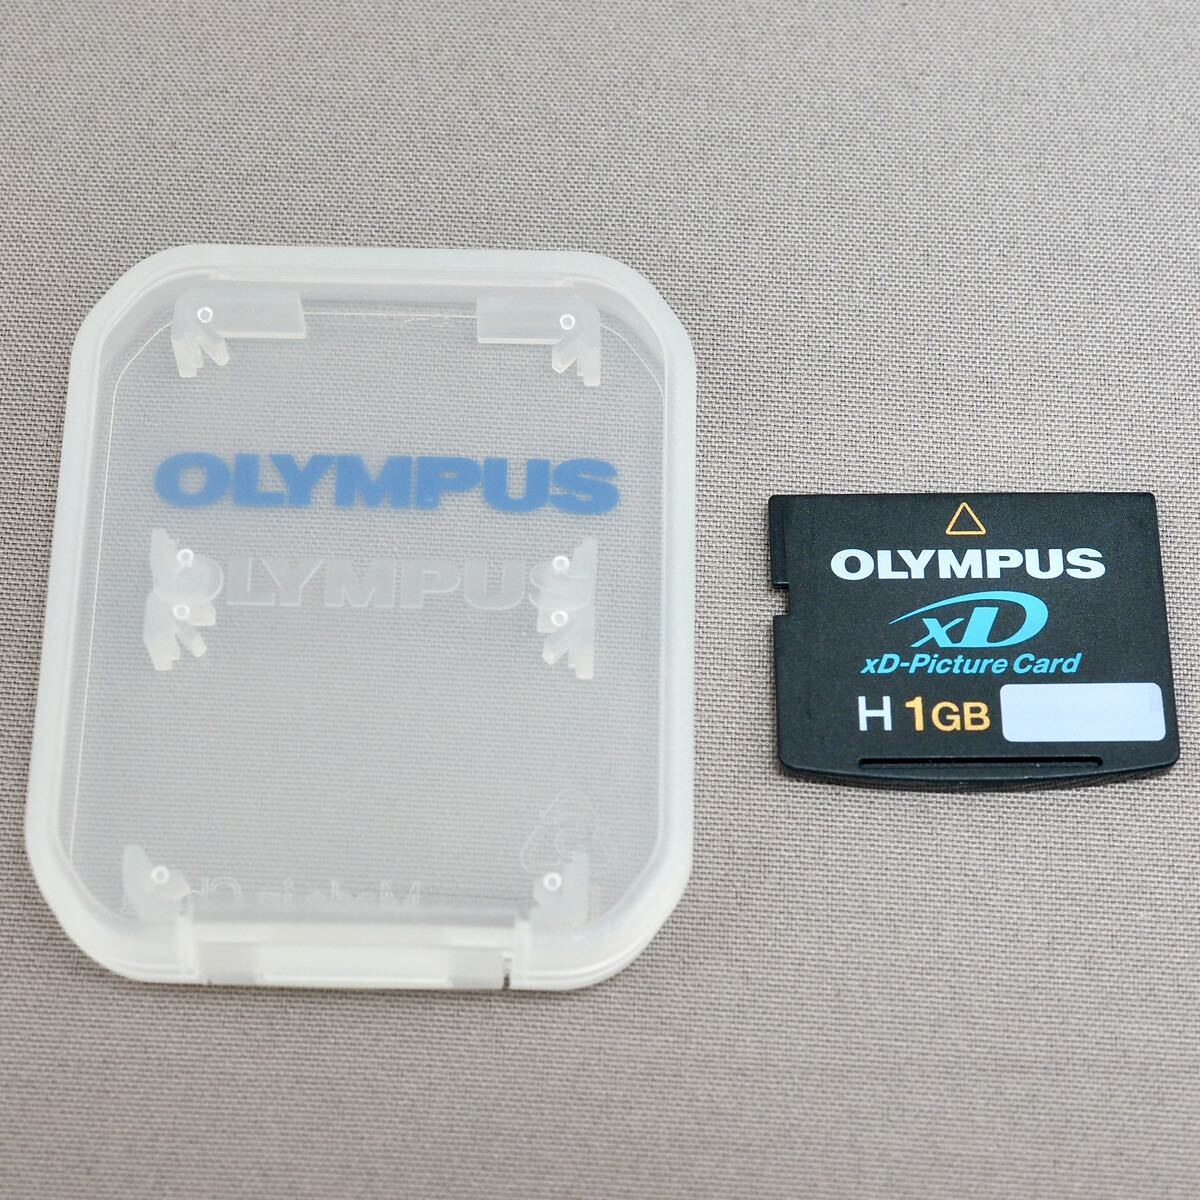 OLYMPUS Olympus xD Picture card xD-Picture Card H type 1GB operation verification settled original case attaching 